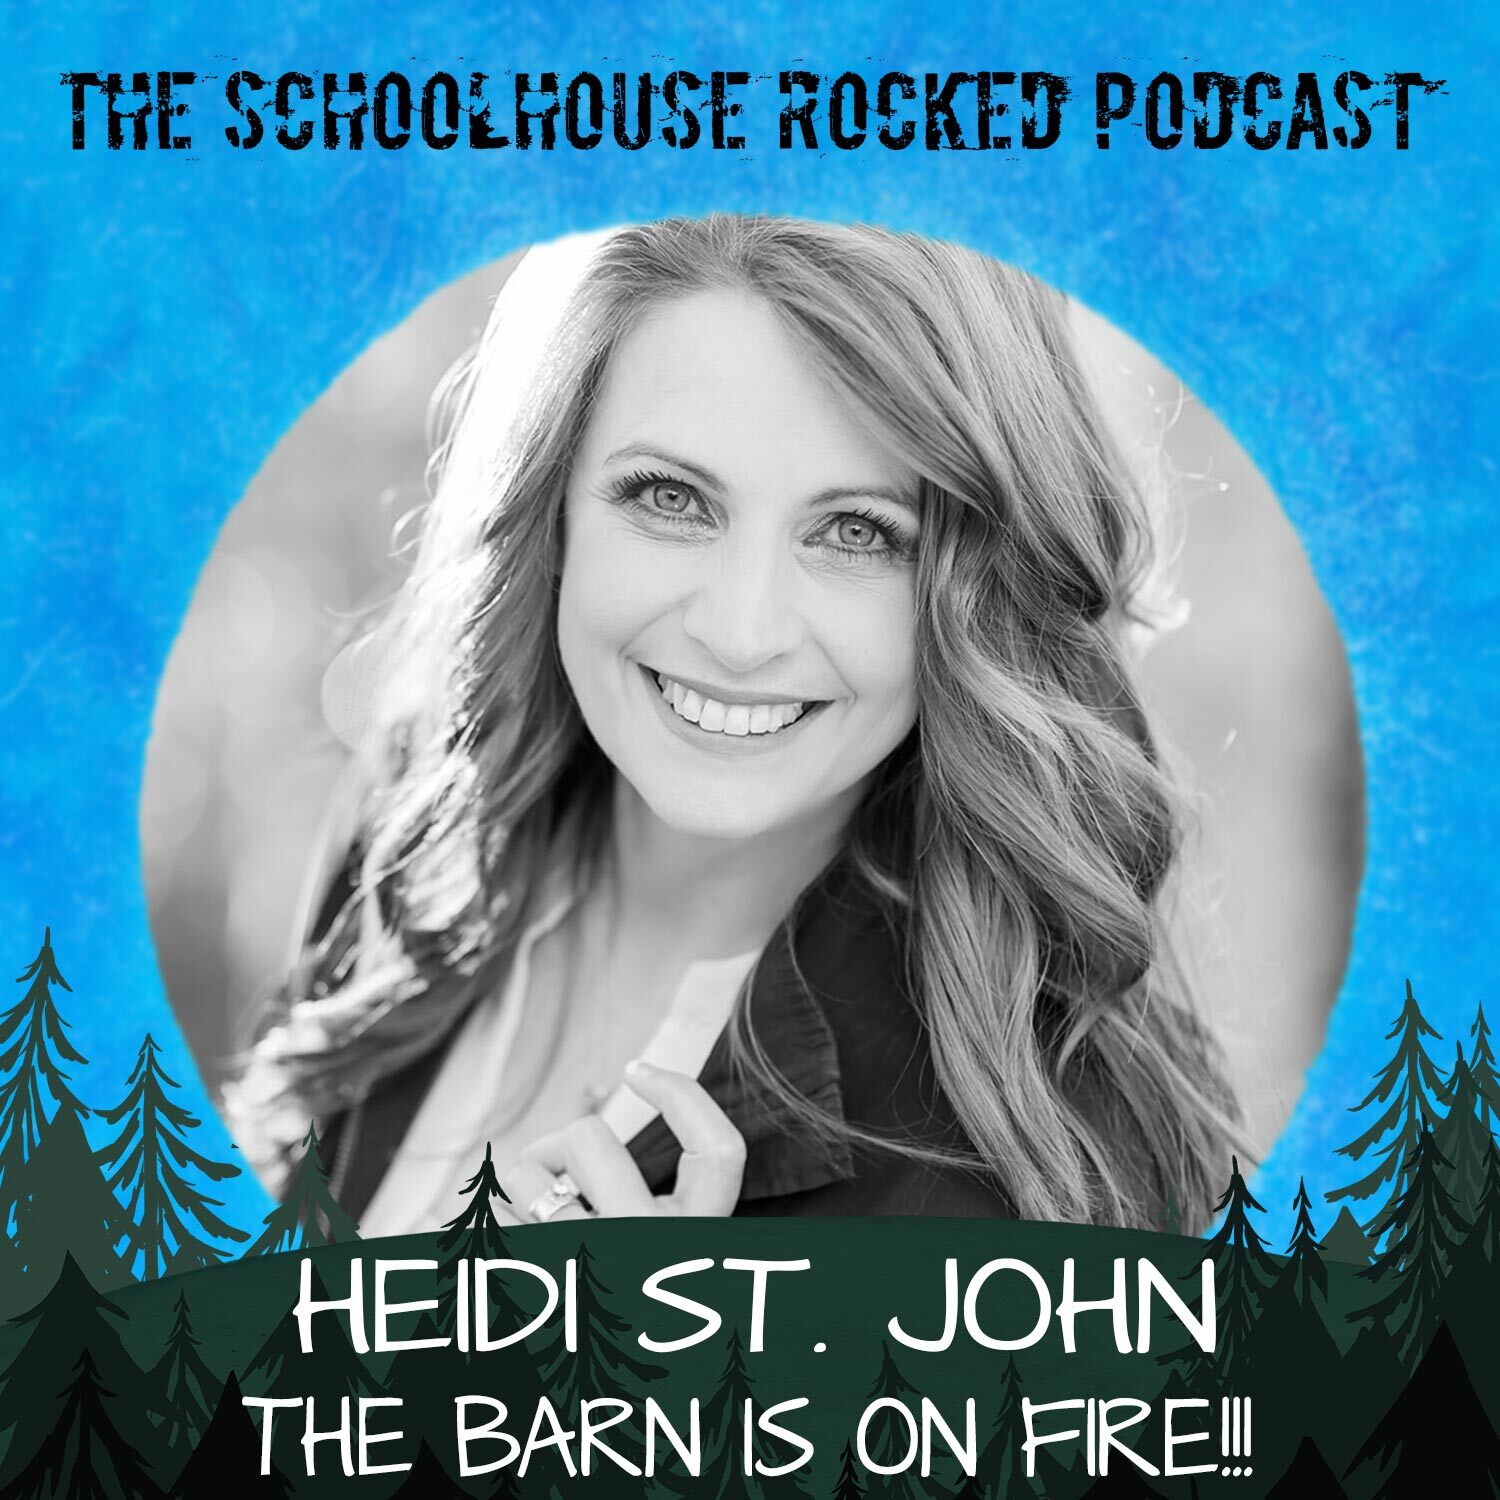 Heidi St John Podcast - Public School Exodus - The Schoolhouse Rocked Podcast